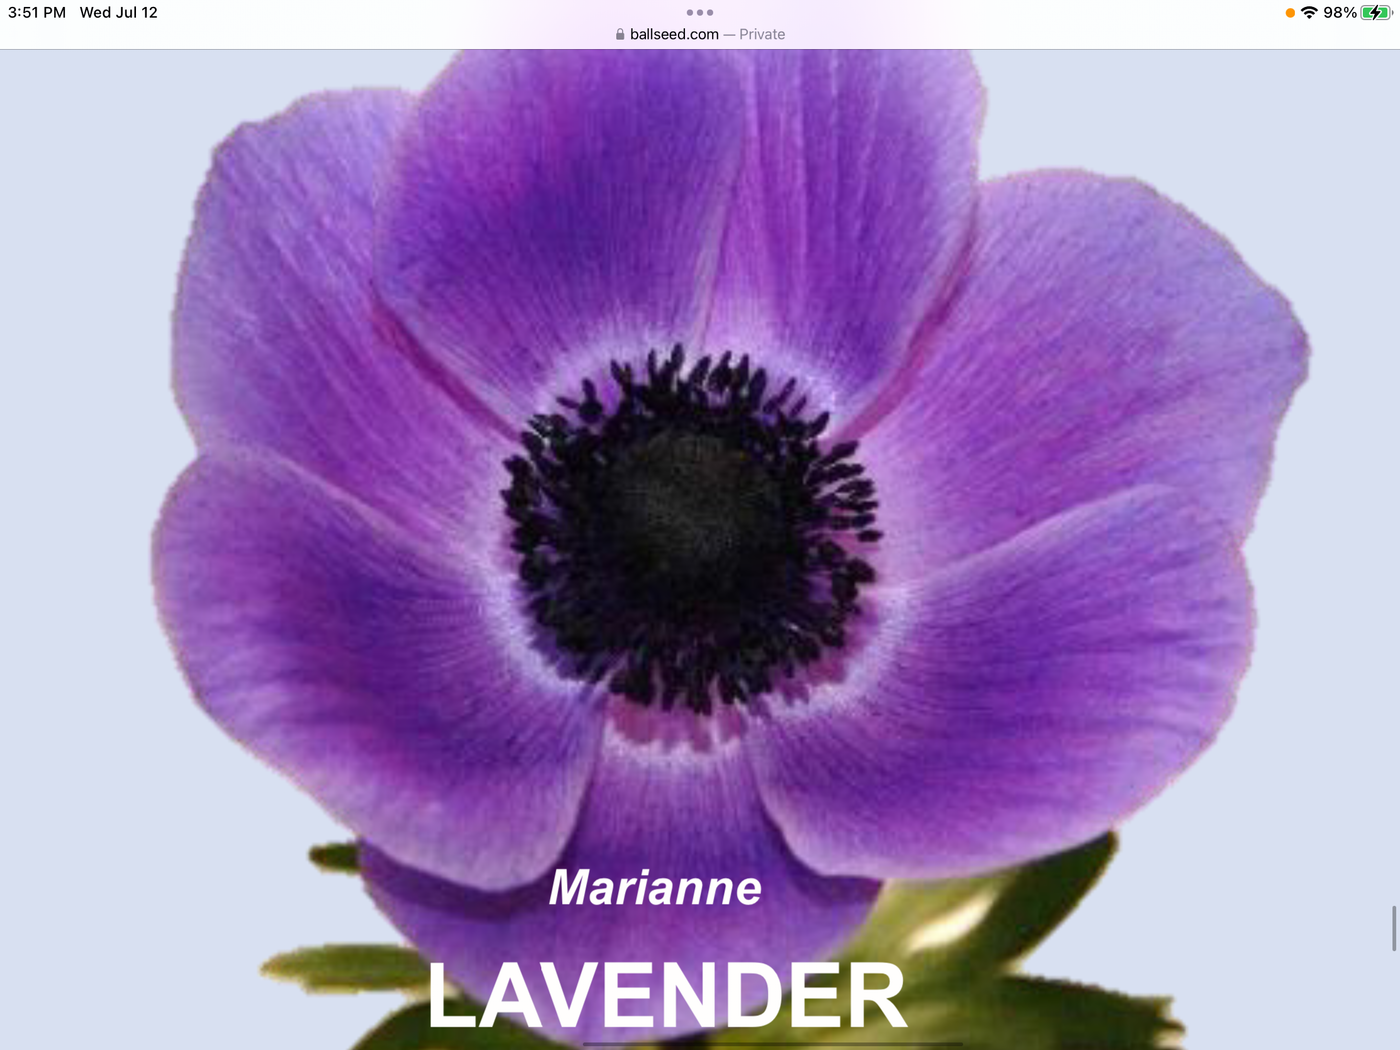 Anemone Marianne Lavender